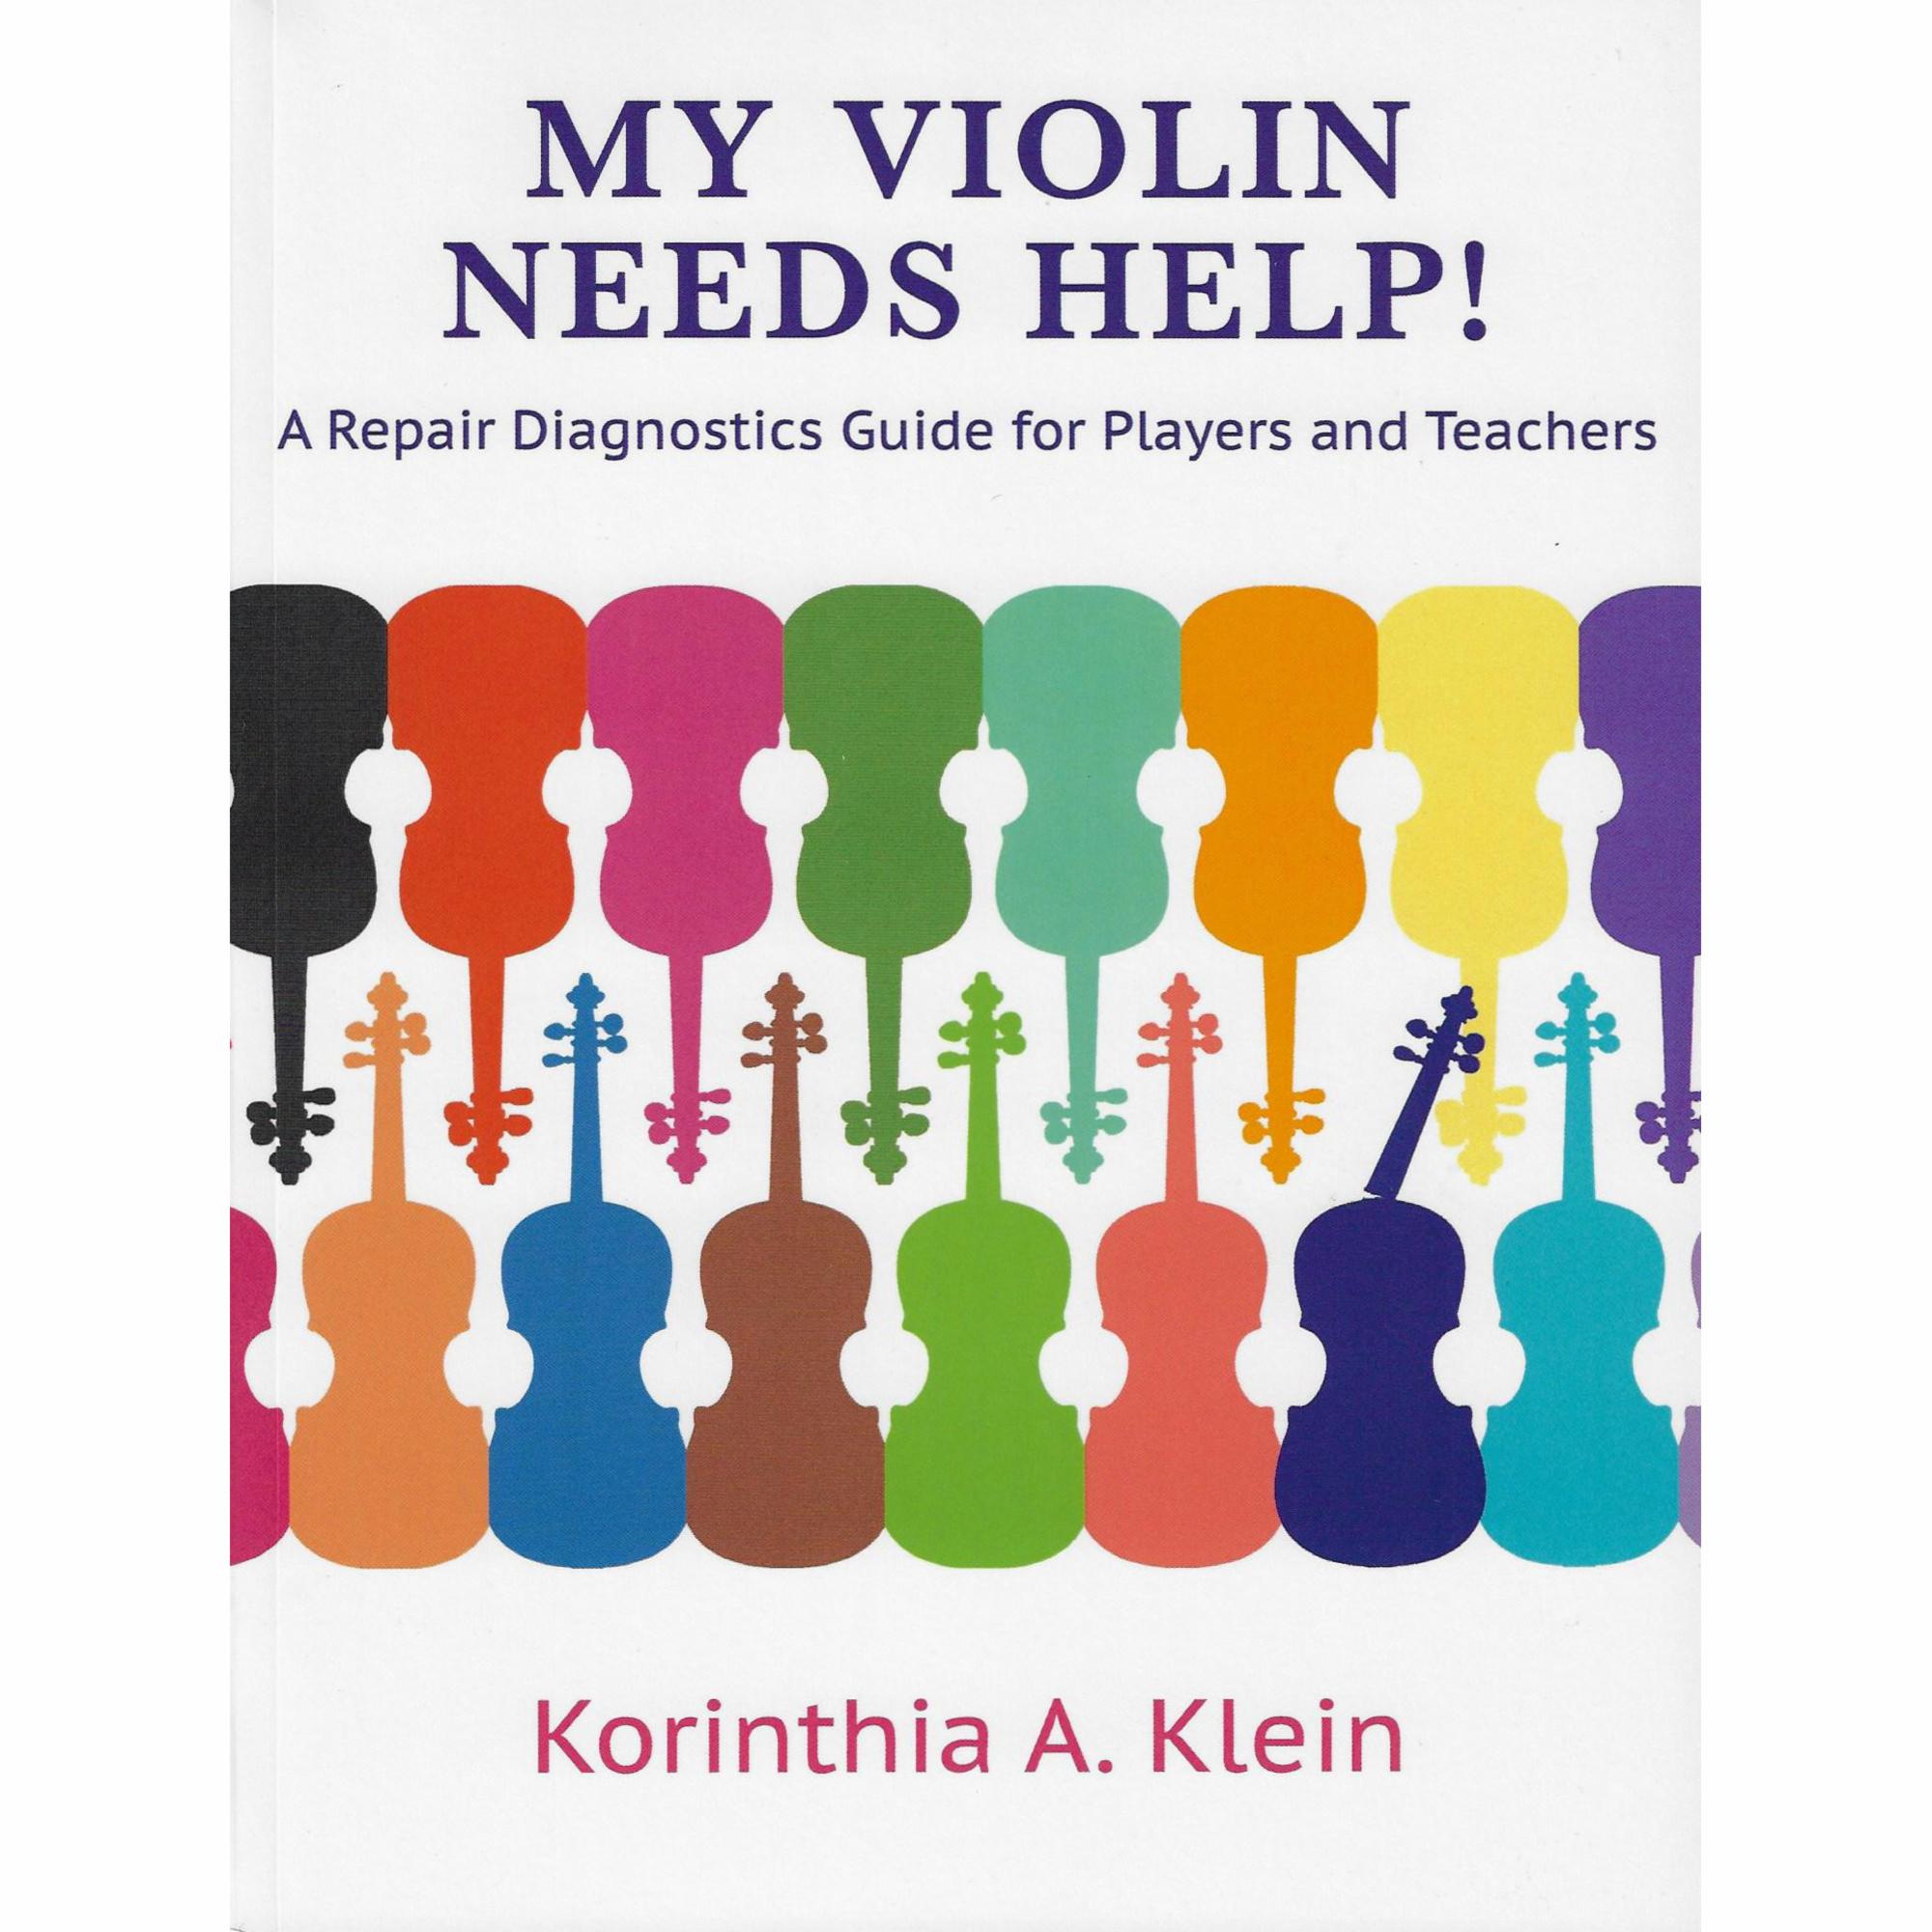 My Violin Needs Help!